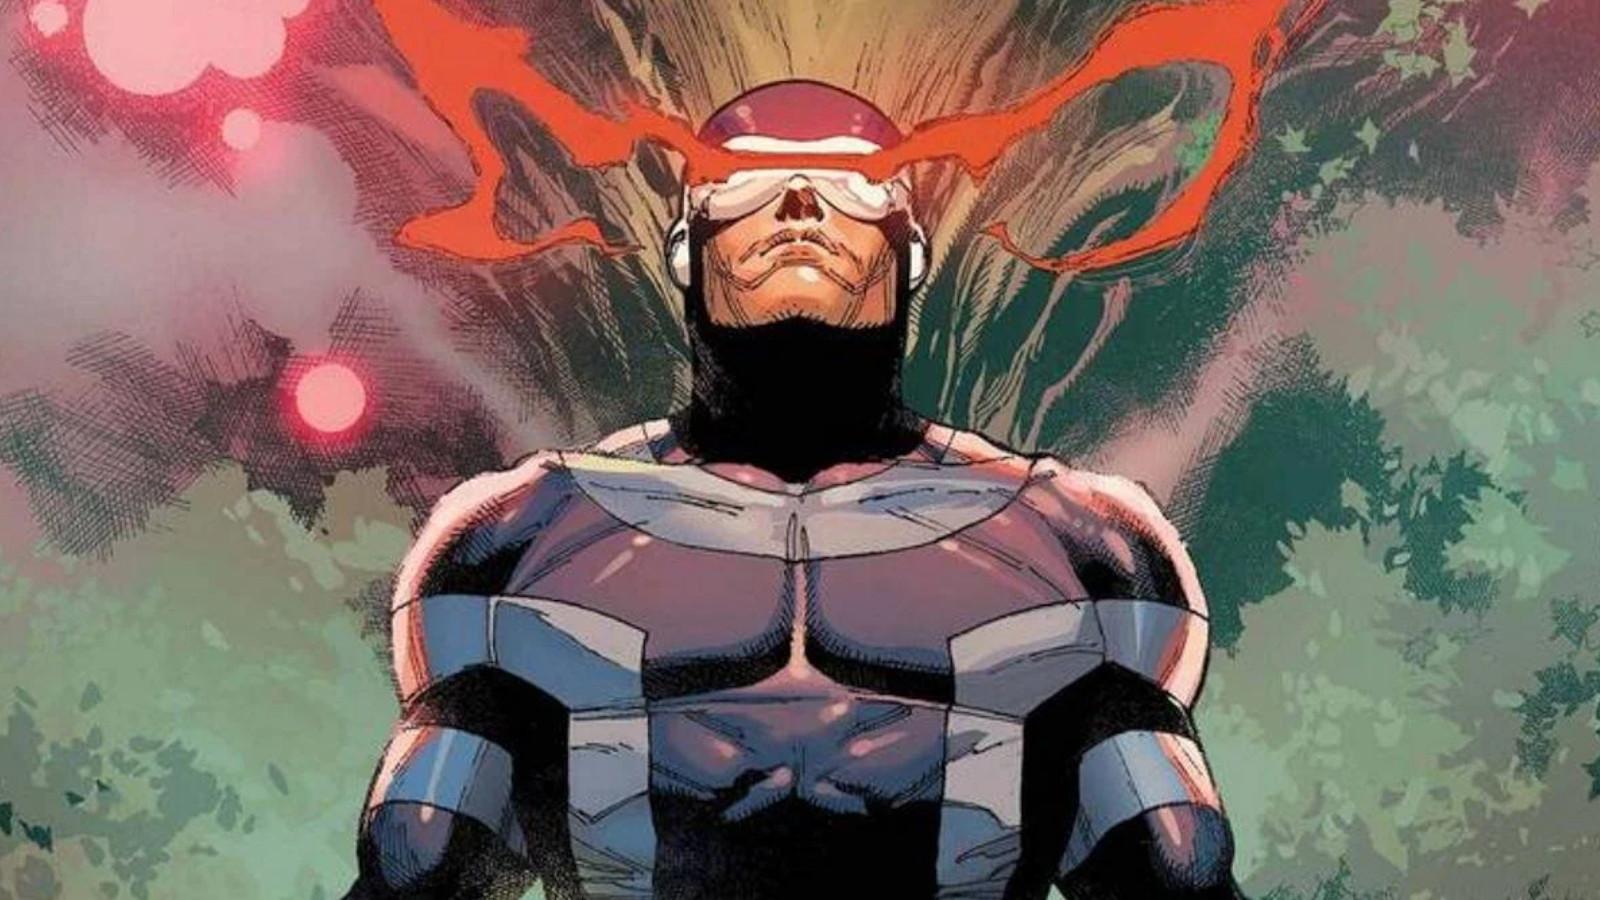 Cyclops as he appears in Marvle Comics